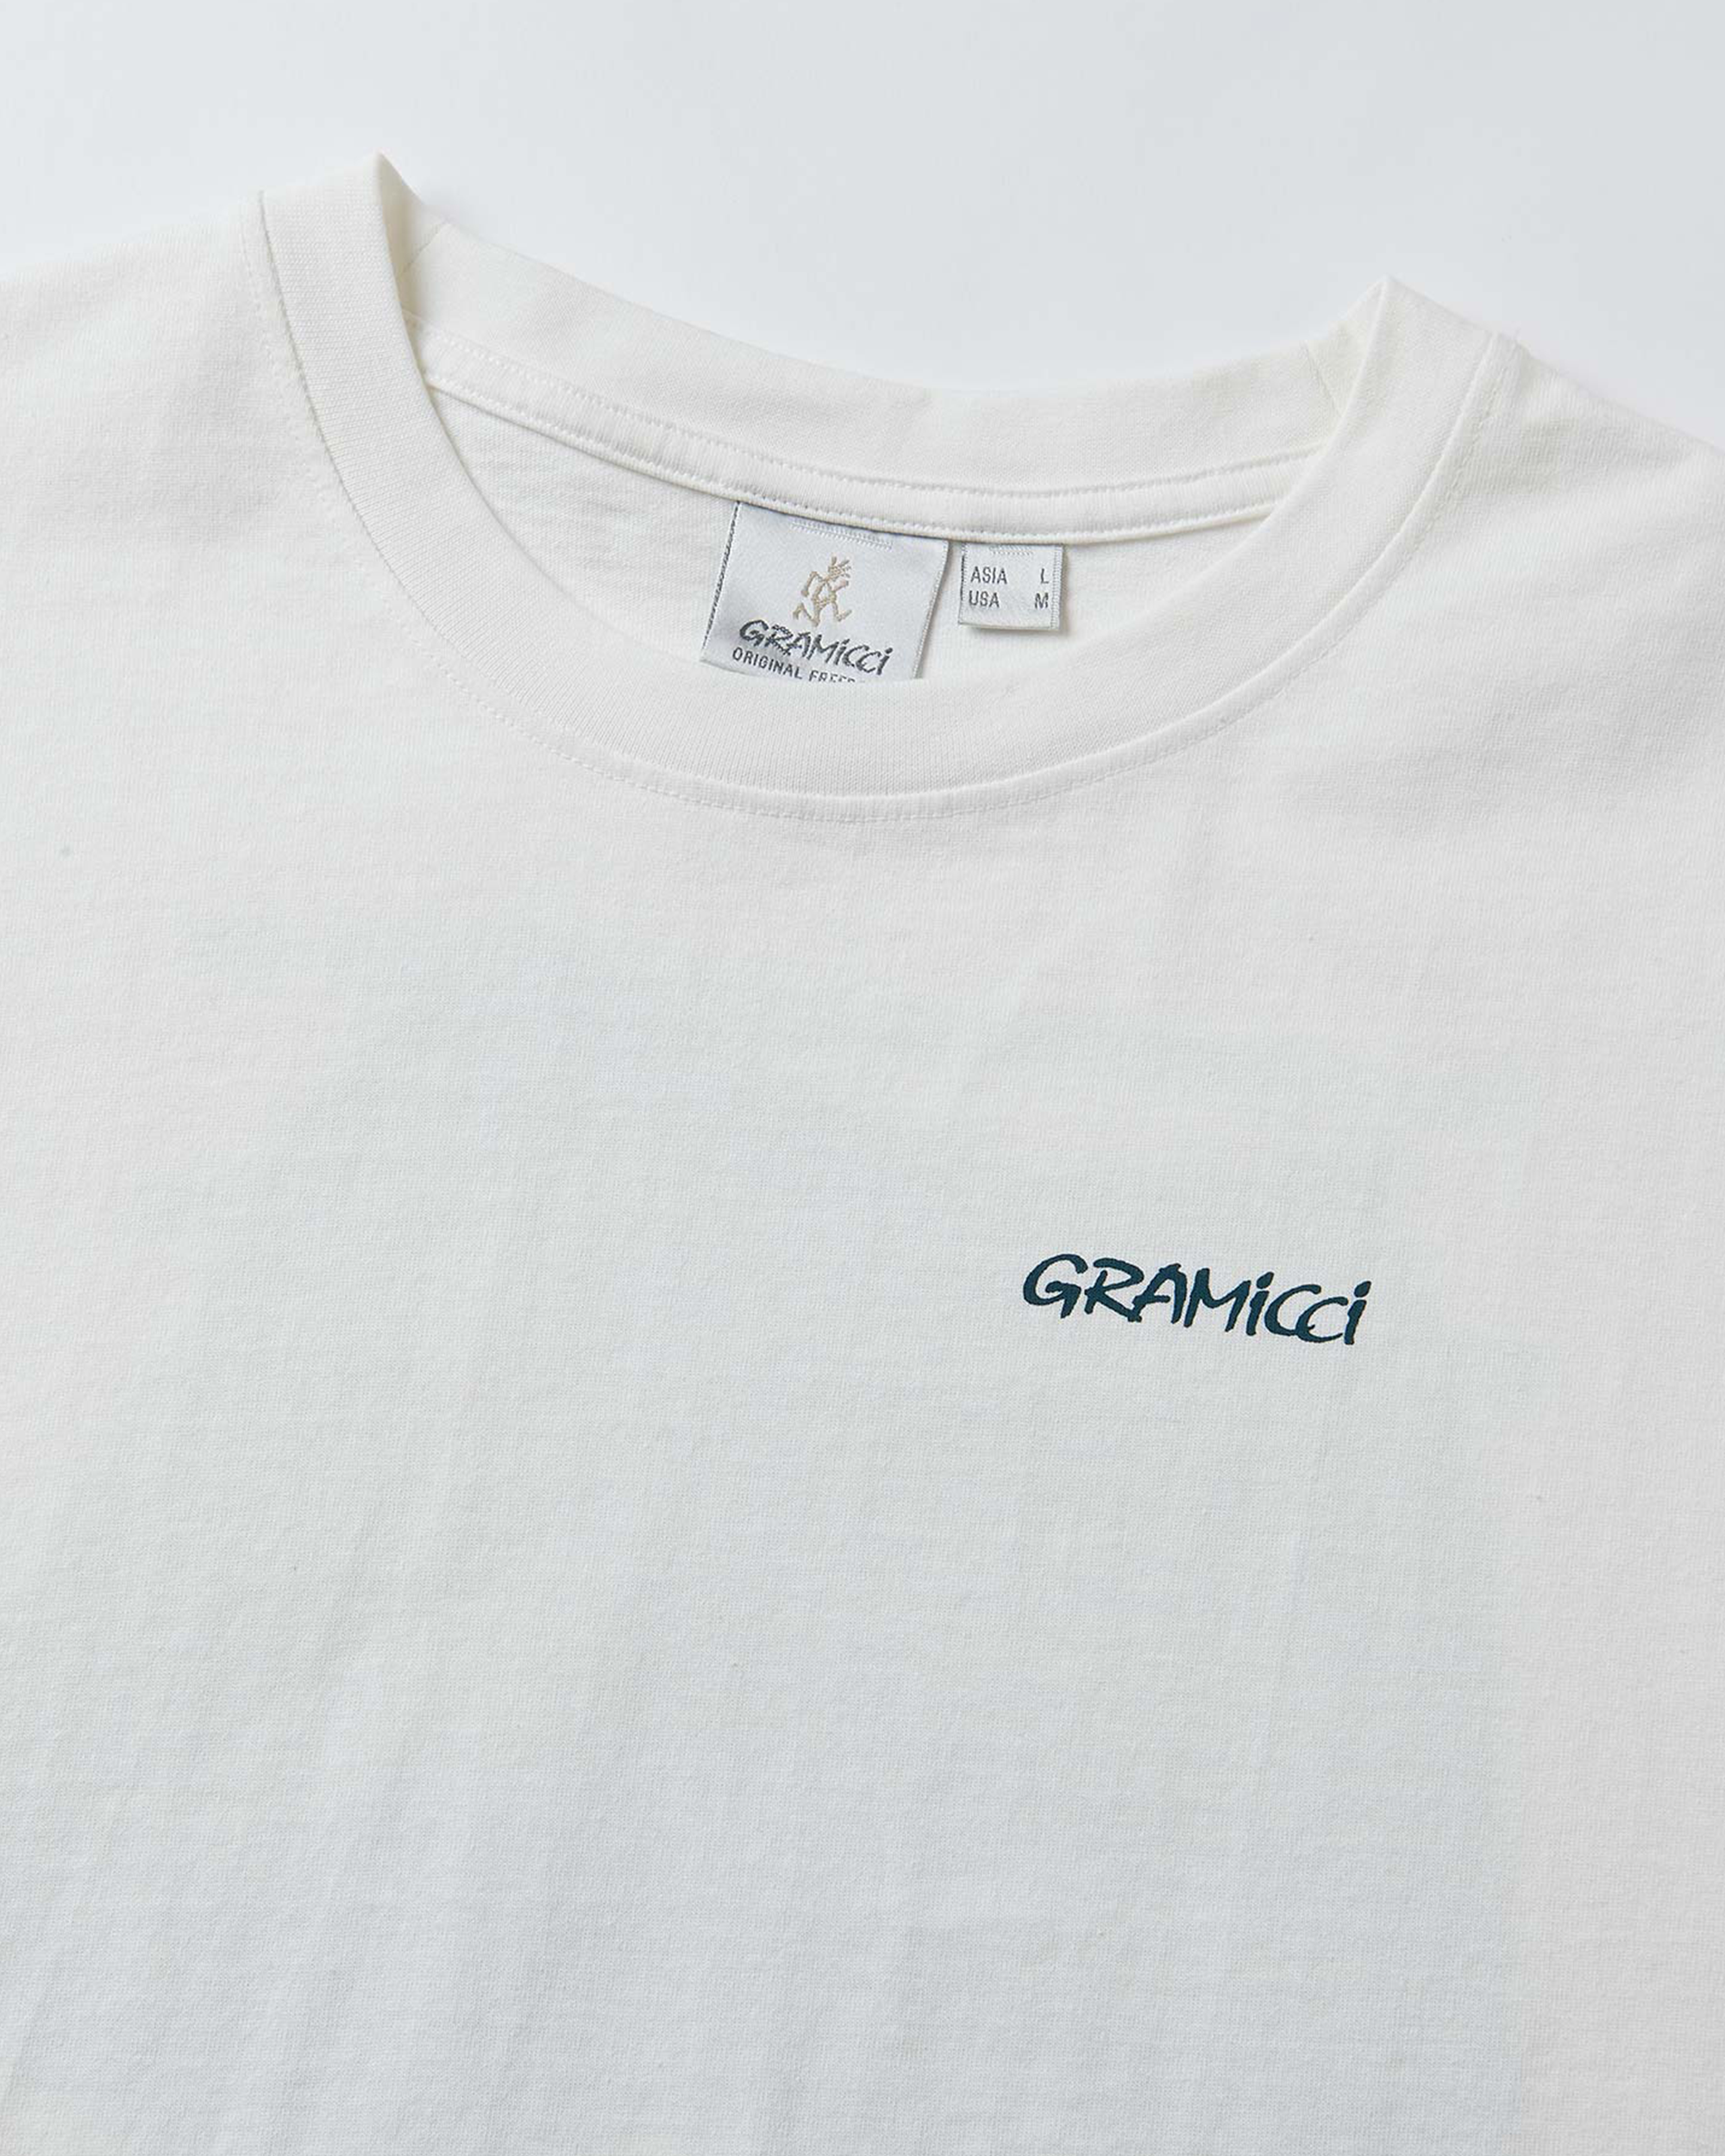 G-Short T-shirt - White